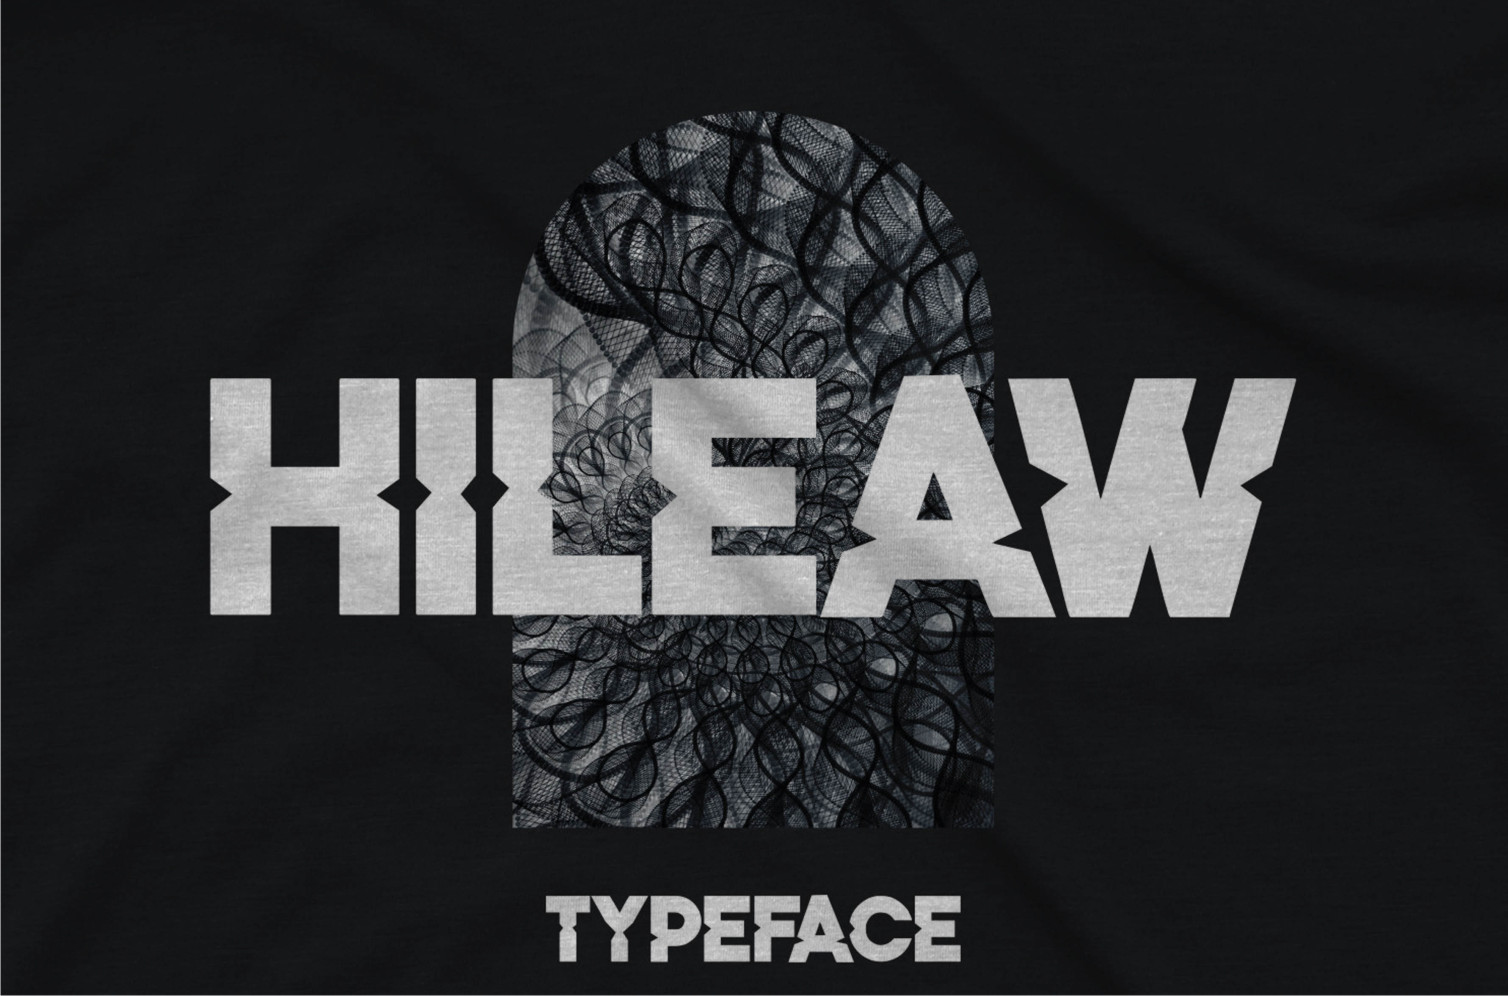 Hileaw Display Font